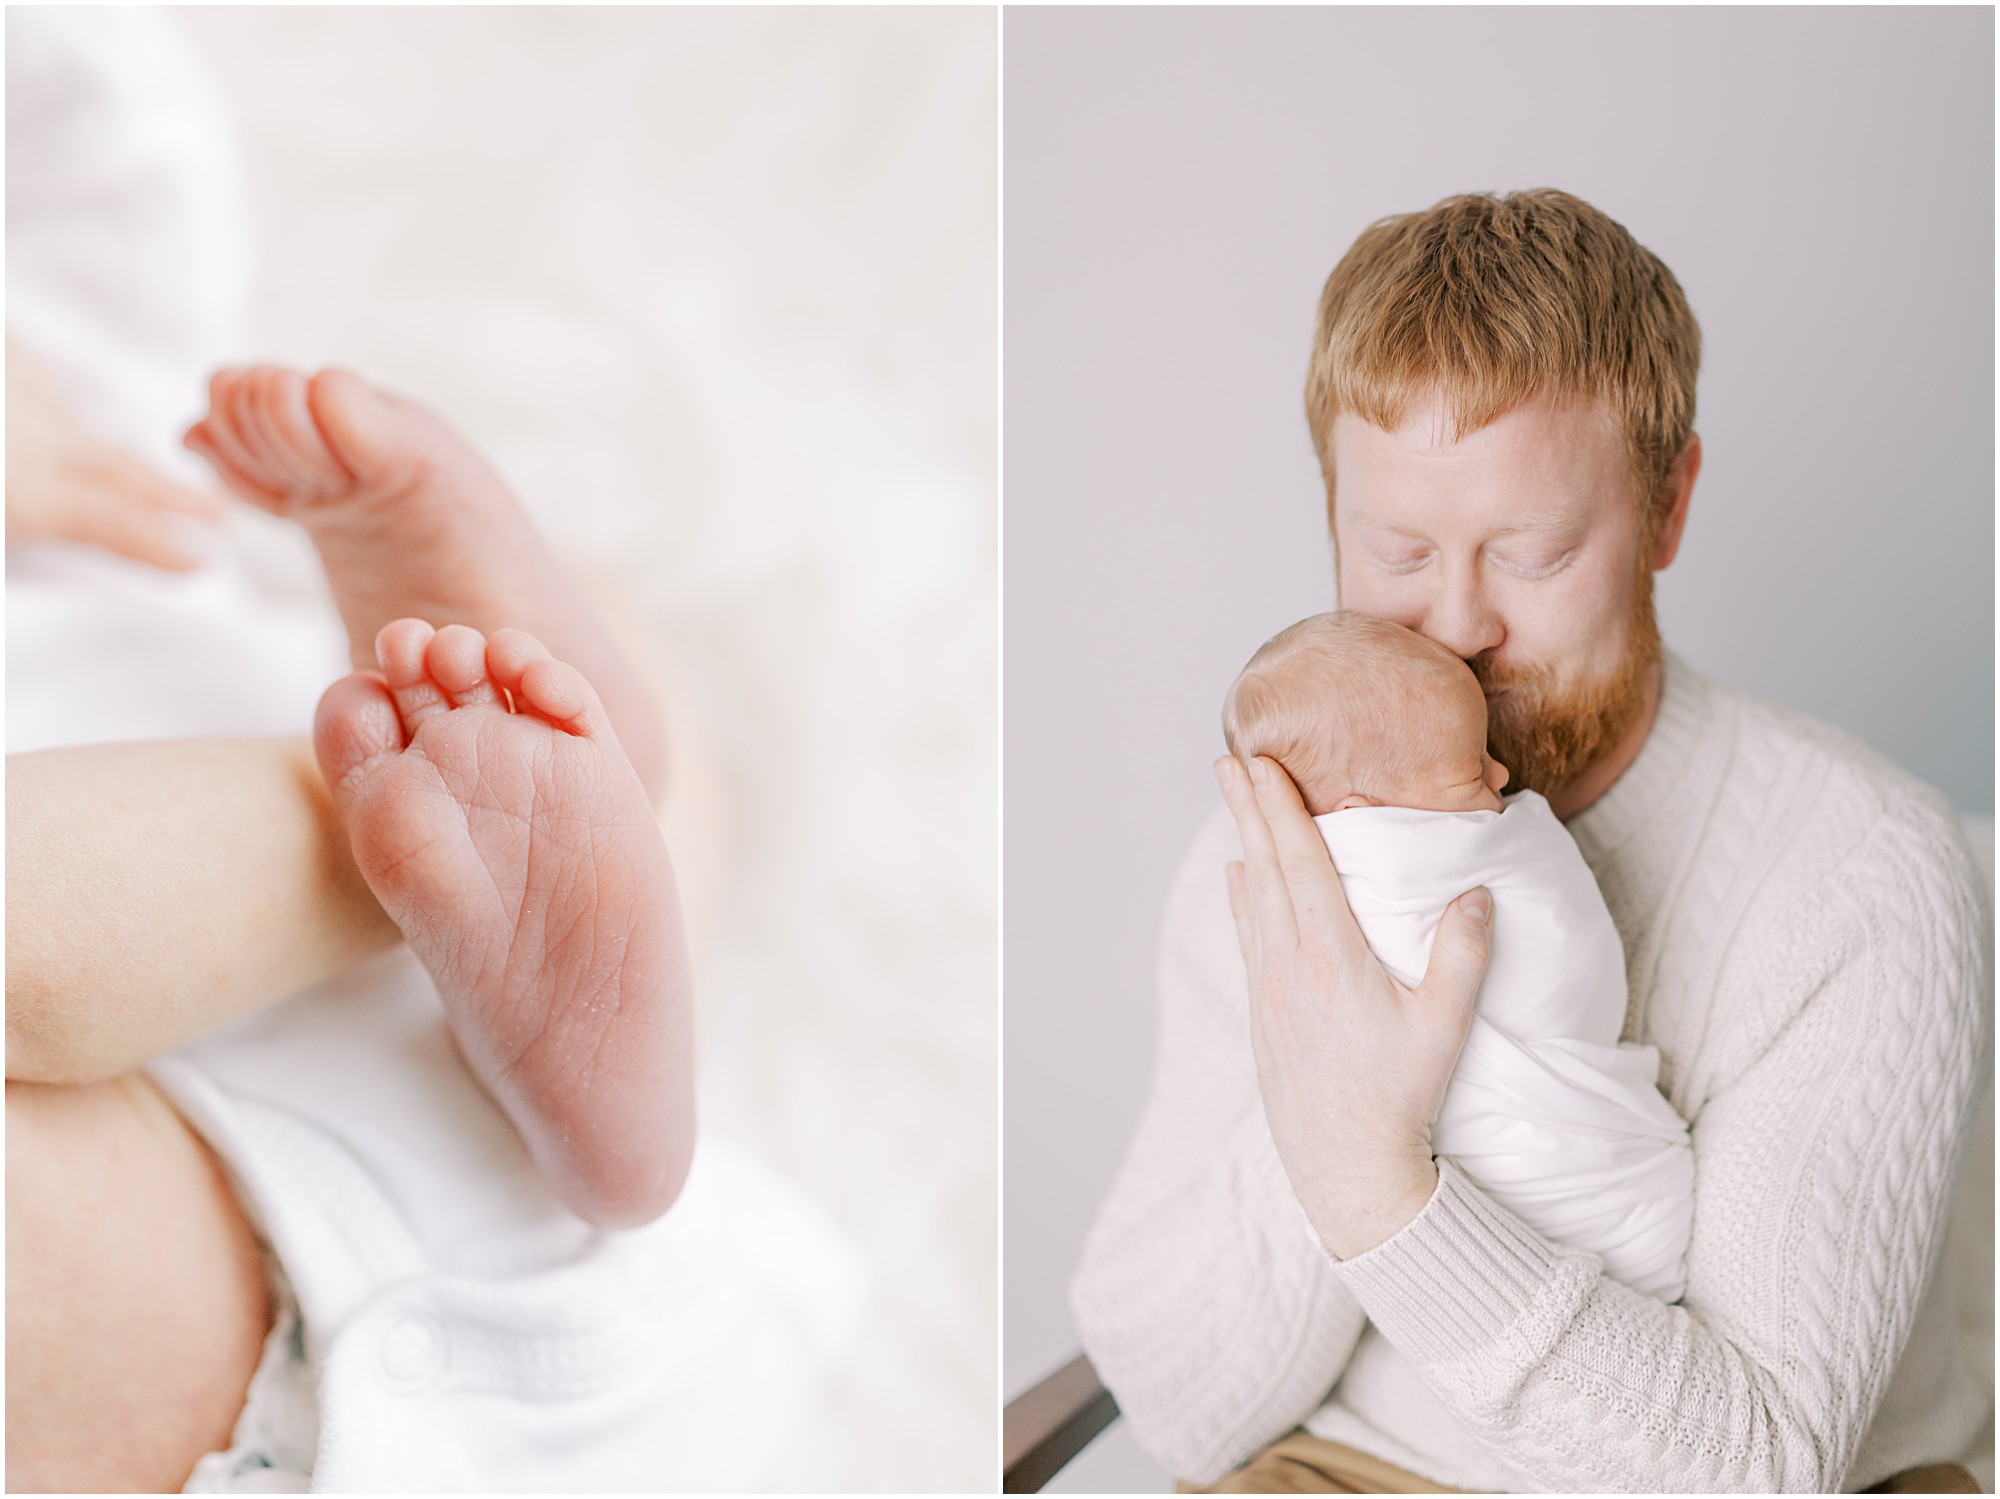 Dad kissing newborn baby boy's head and details of the newborn's feet